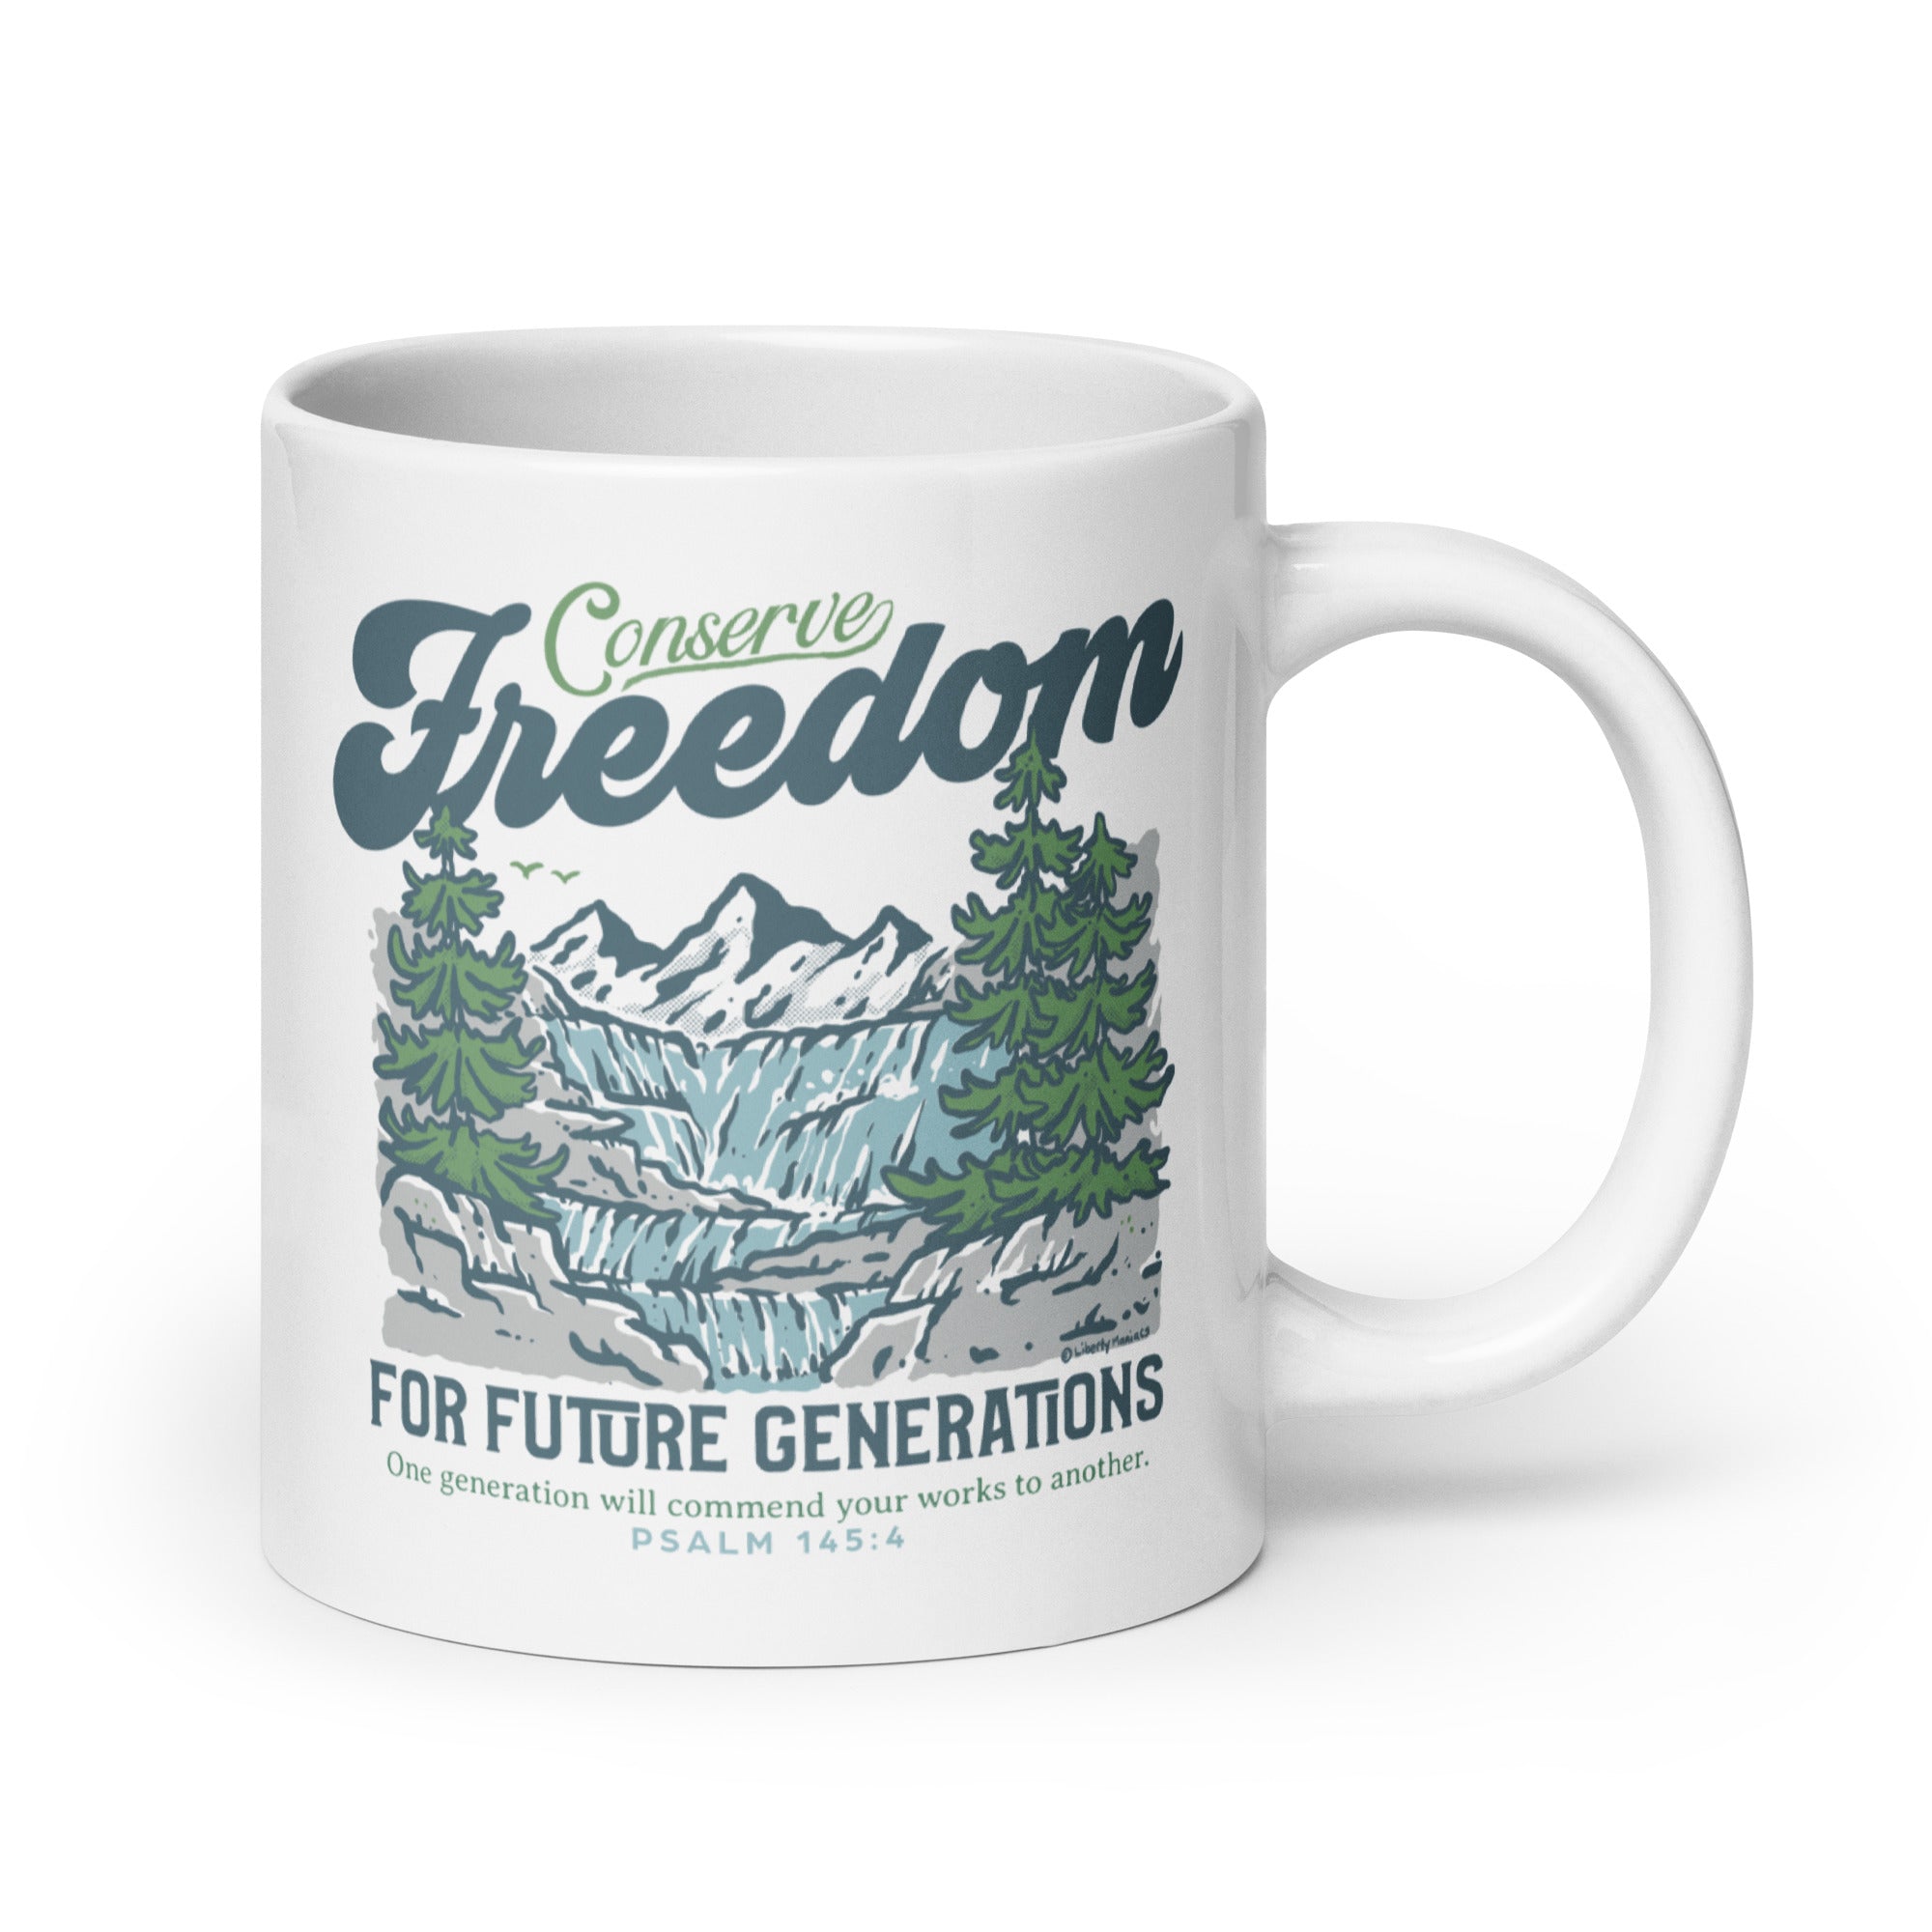 Conserve Freedom for Future Generations Mug